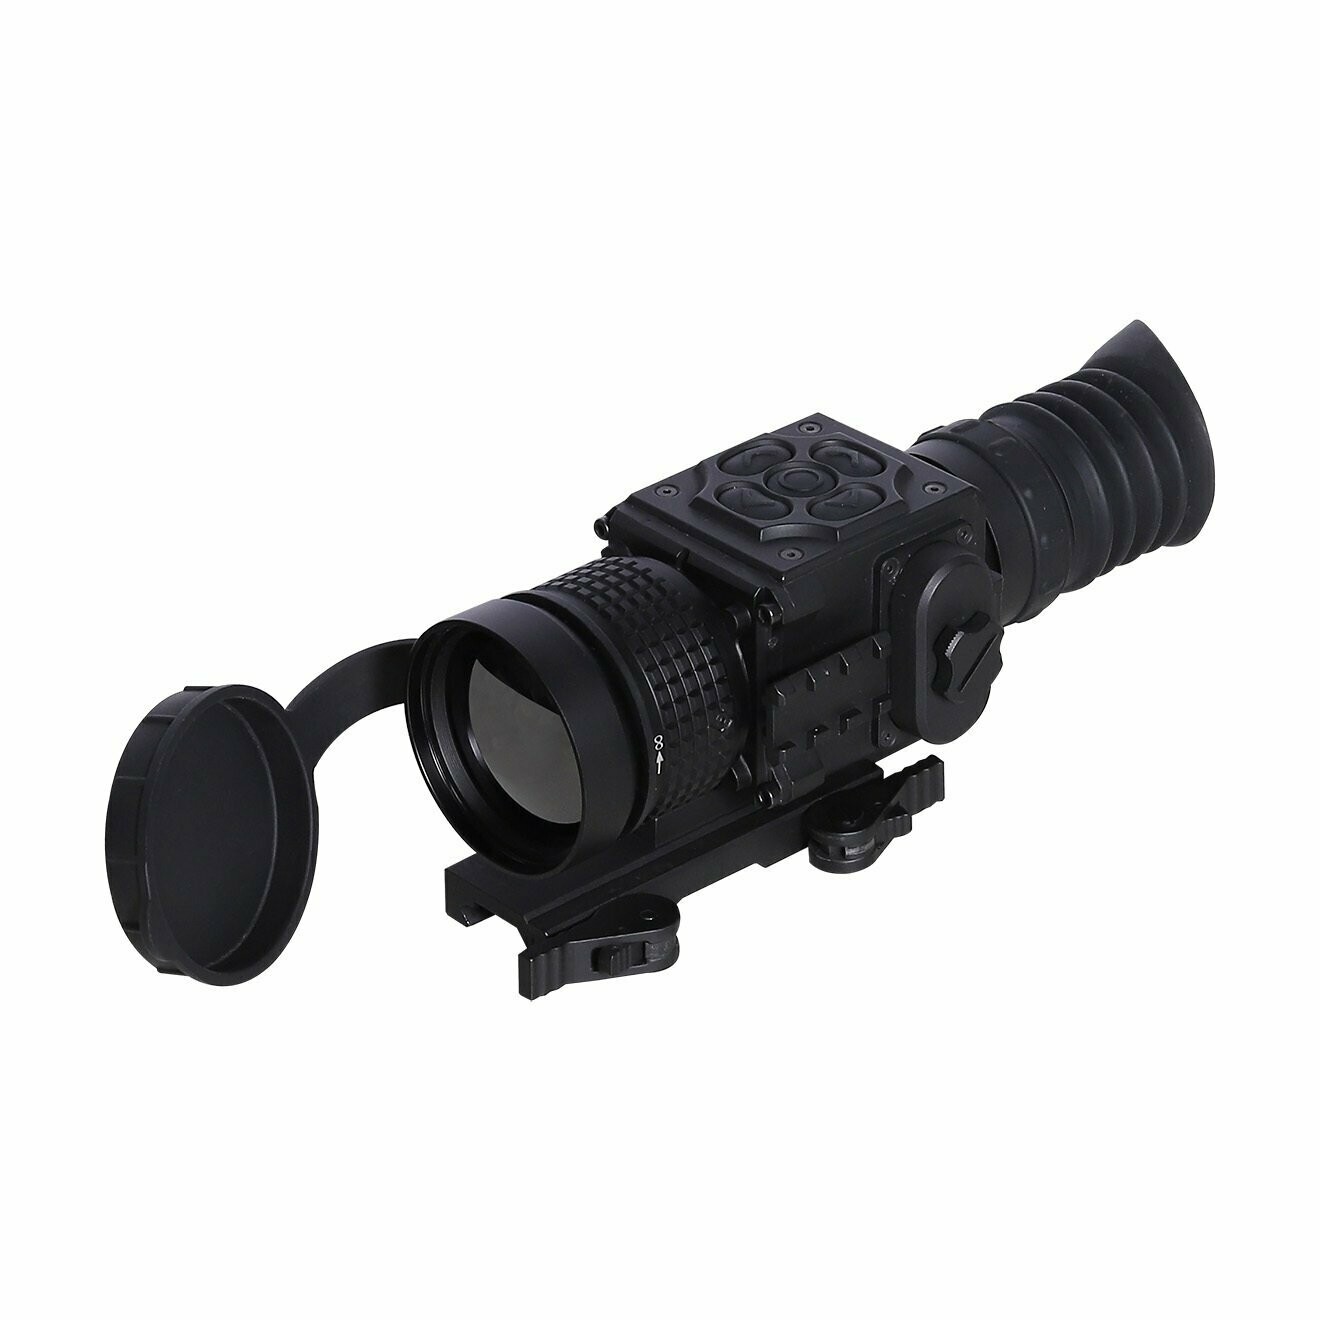 Python TS50-Micro (AGM Global Vision) - Wärmebildkamera mit Zieloptik und  Picatinny-Aufnahme - Vorführmodell